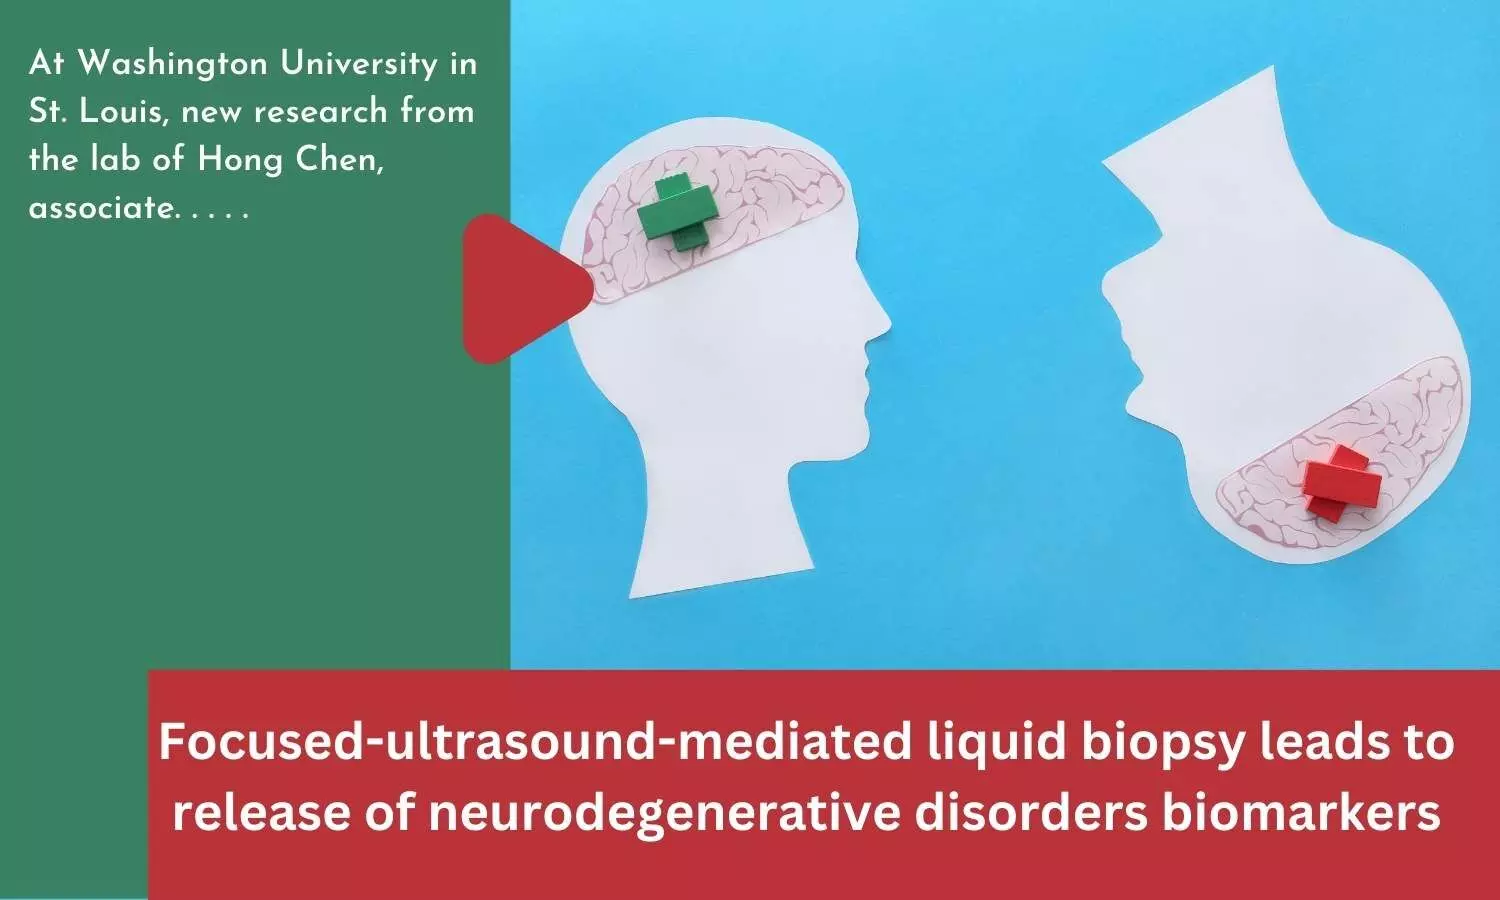 Focused-ultrasound-mediated liquid biopsy leads to release of neurodegenerative disorders biomarkers